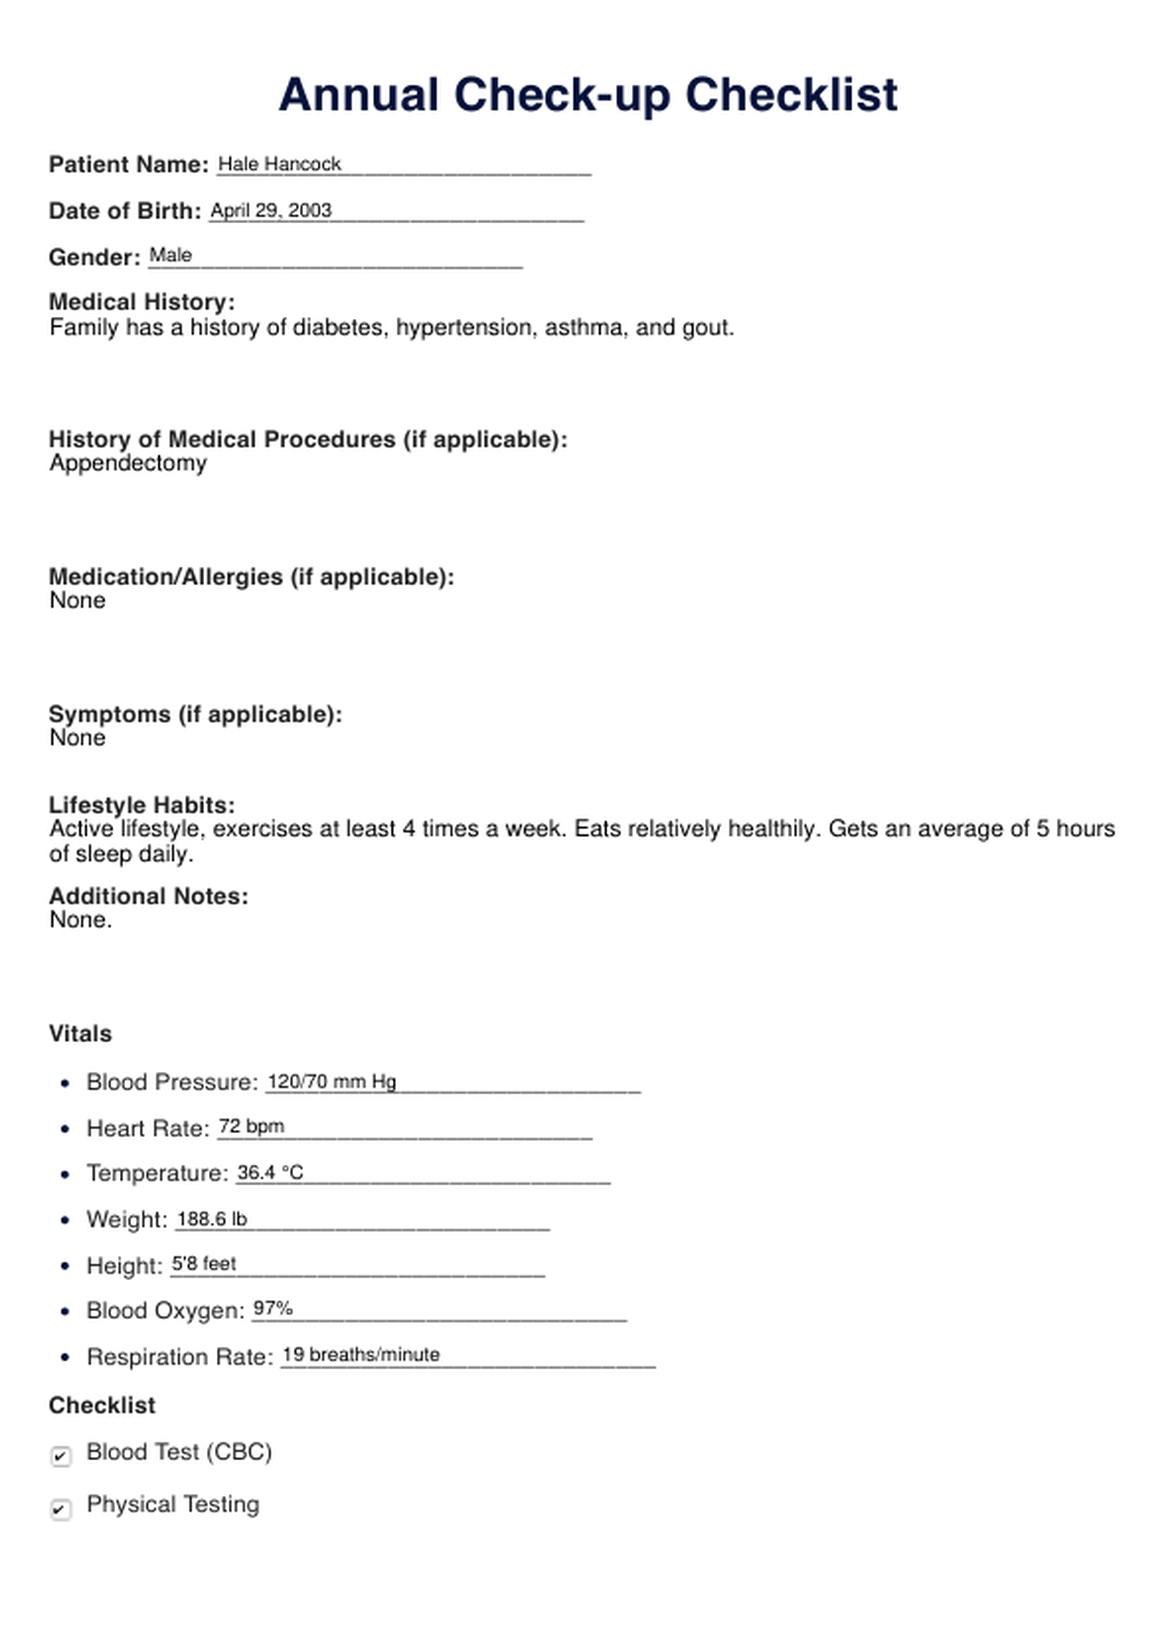 Annual Check-Up Checklist PDF Example